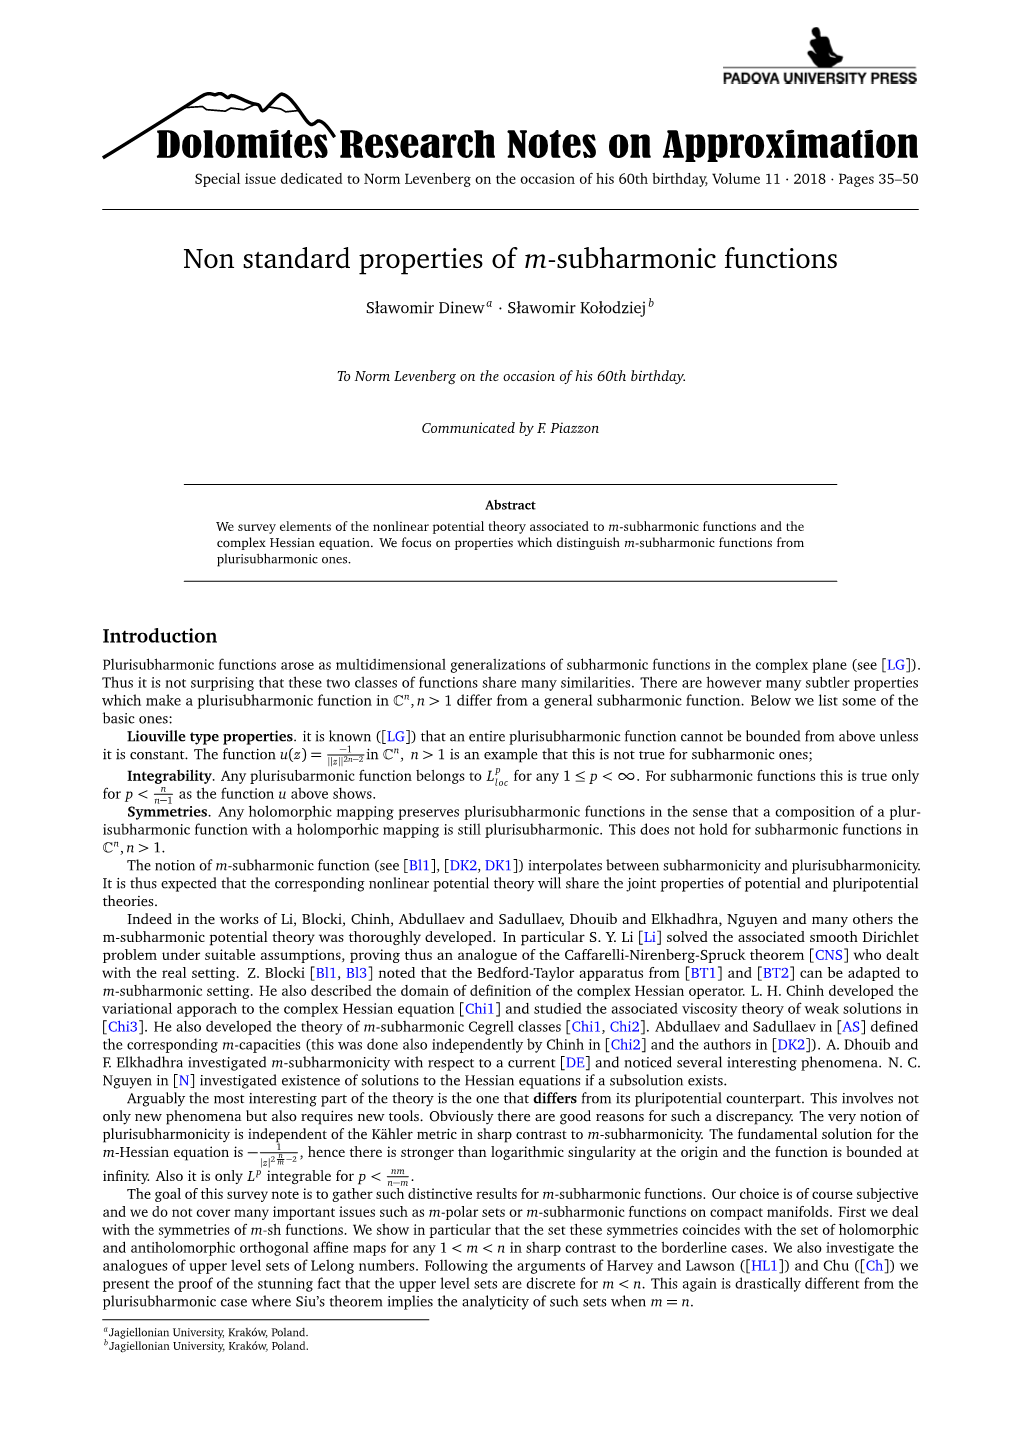 Non Standard Properties of M-Subharmonic Functions